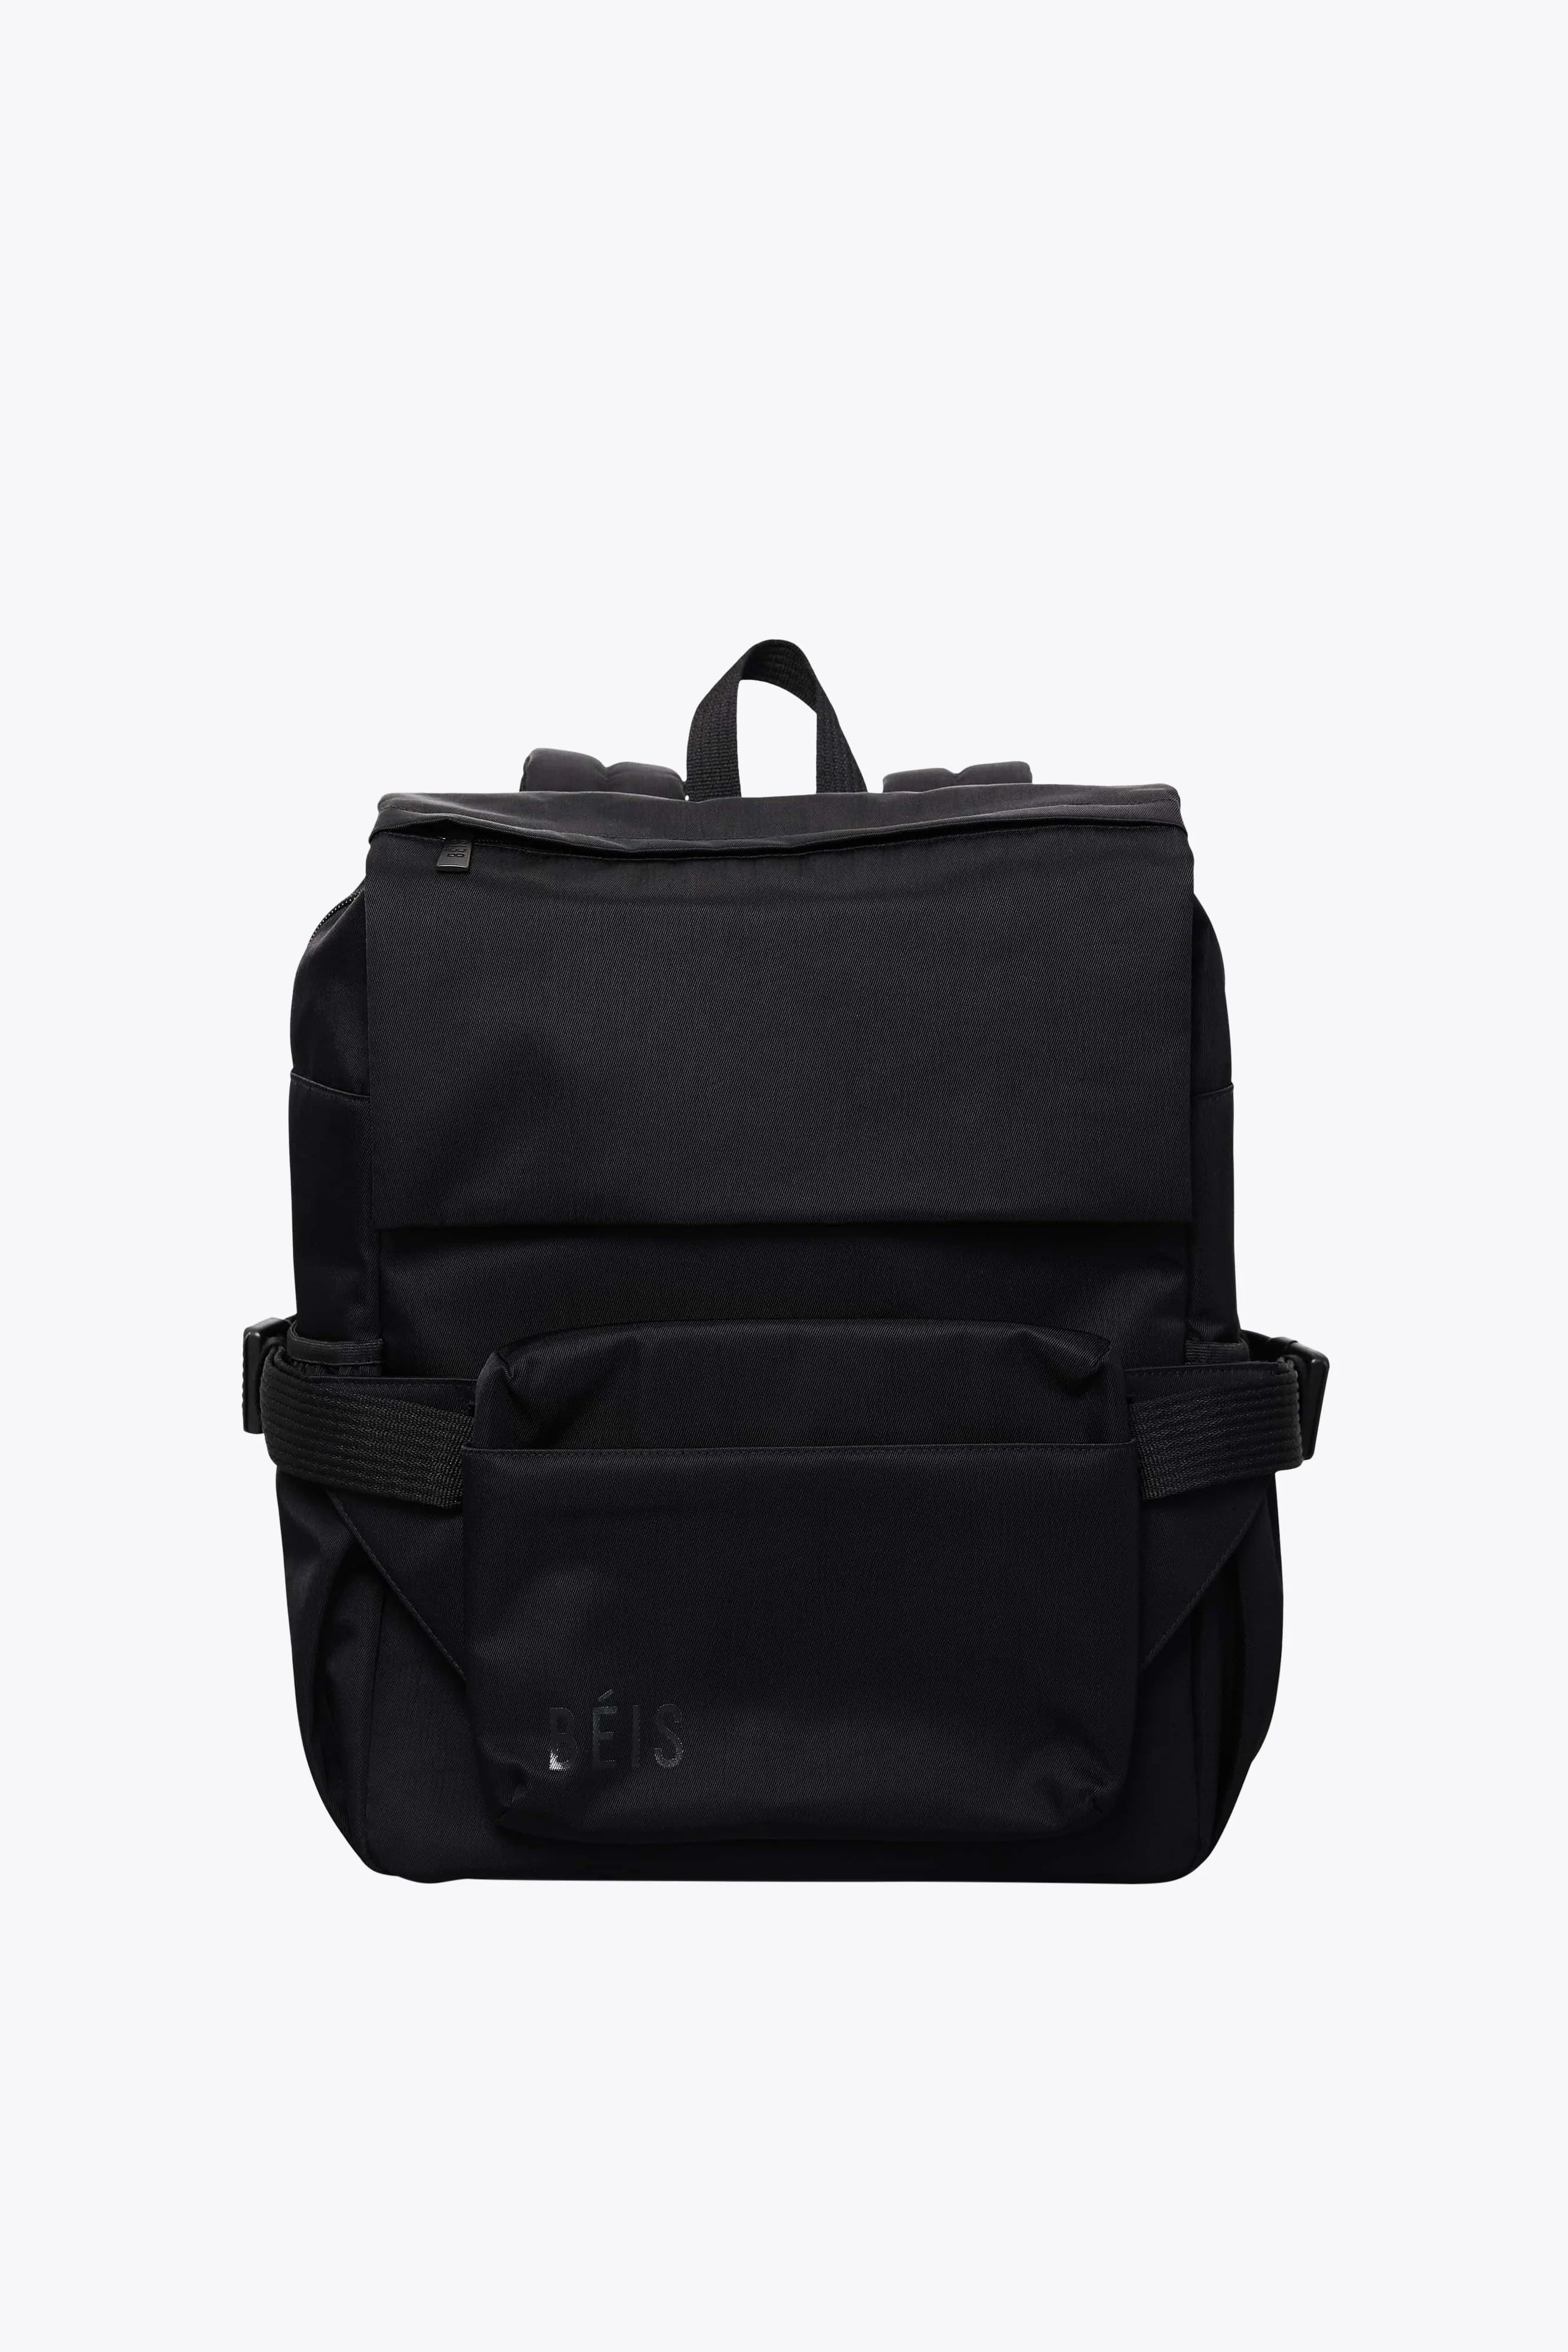 BÉIS 'The Ultimate Diaper Backpack' in Black - Diaper Bag & Diaper Backpack | BÉIS Travel